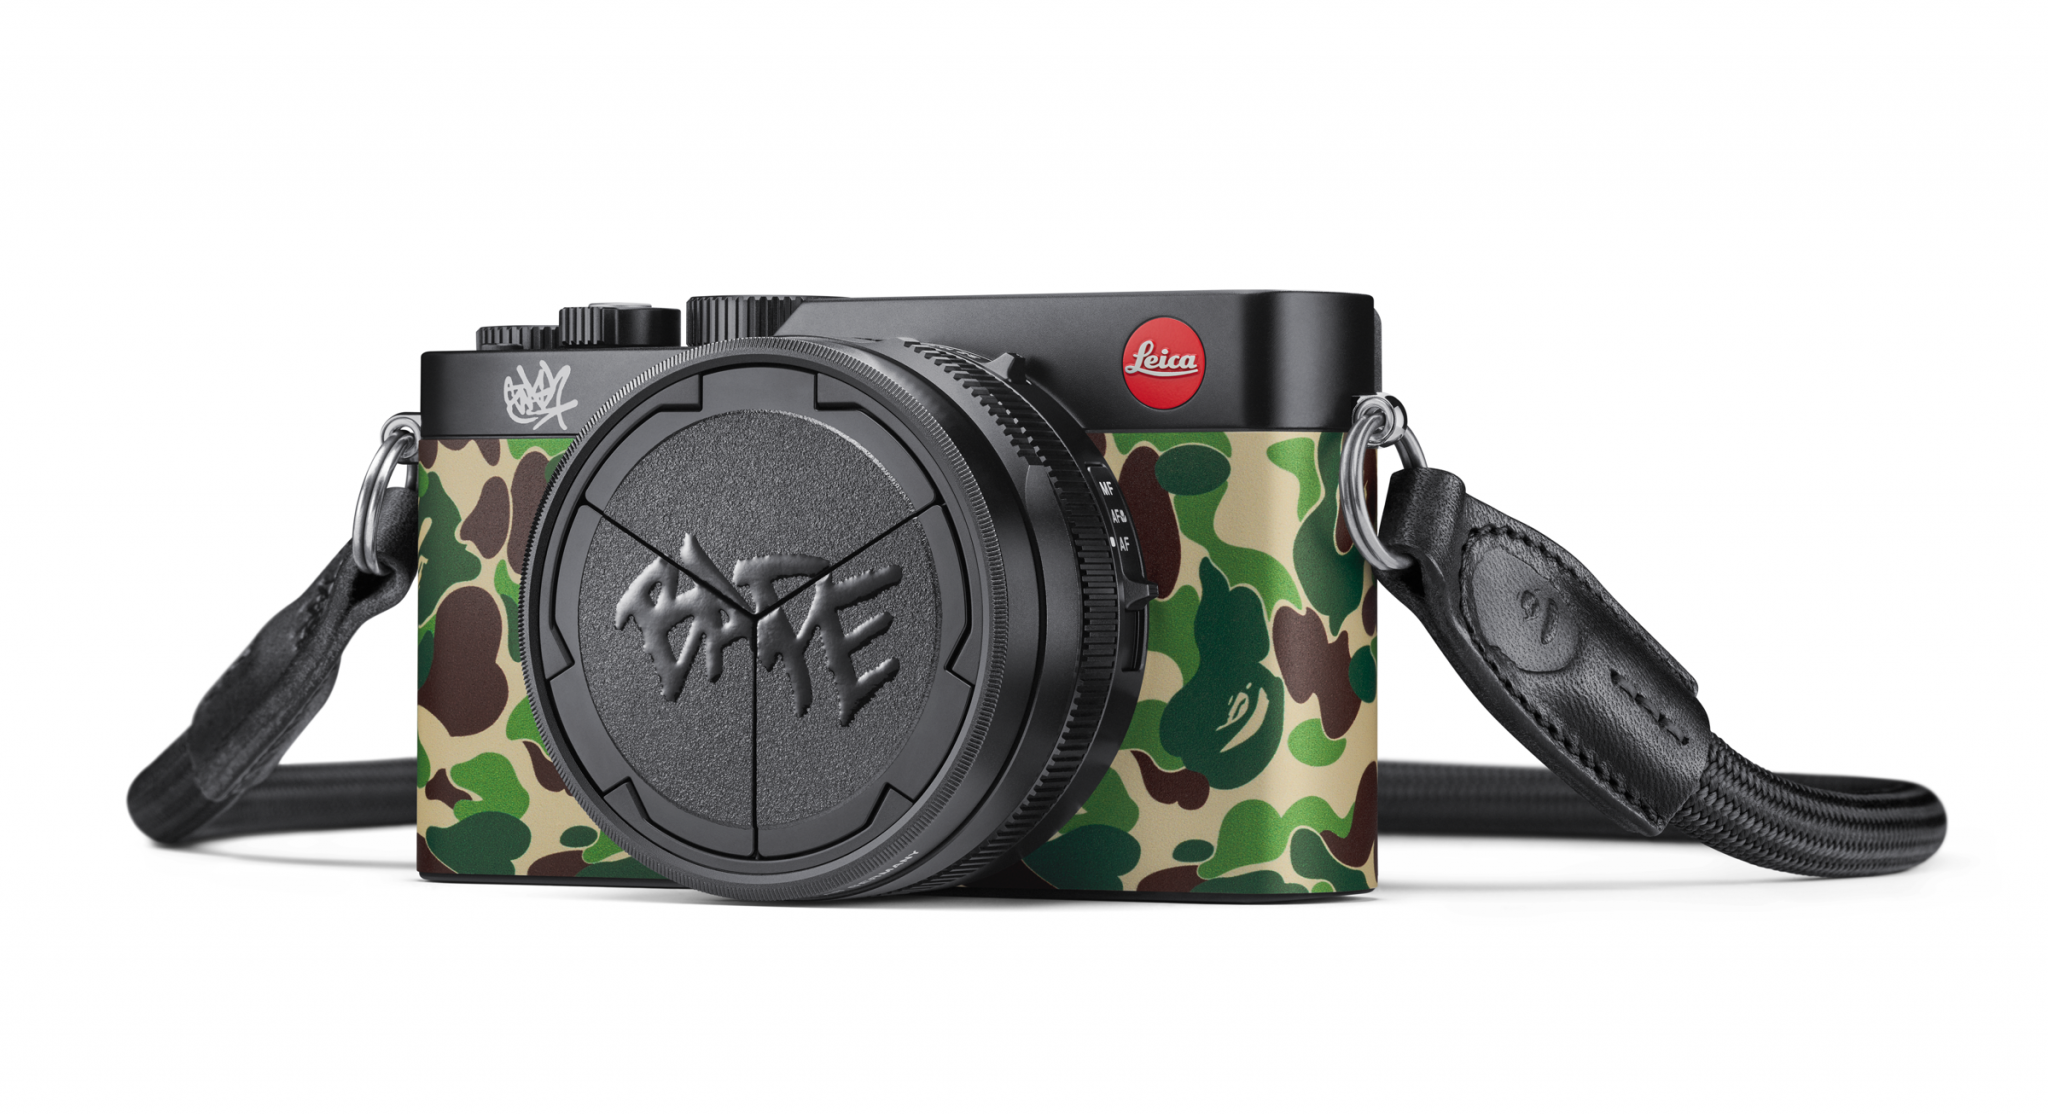 Leica เปิดตัวกล้อง D-Lux 7 รุ่นพิเศษ จับมือแบรนด์ดัง A BATHING APE และ STASH มีเพียง 1850 ตัวในโลก